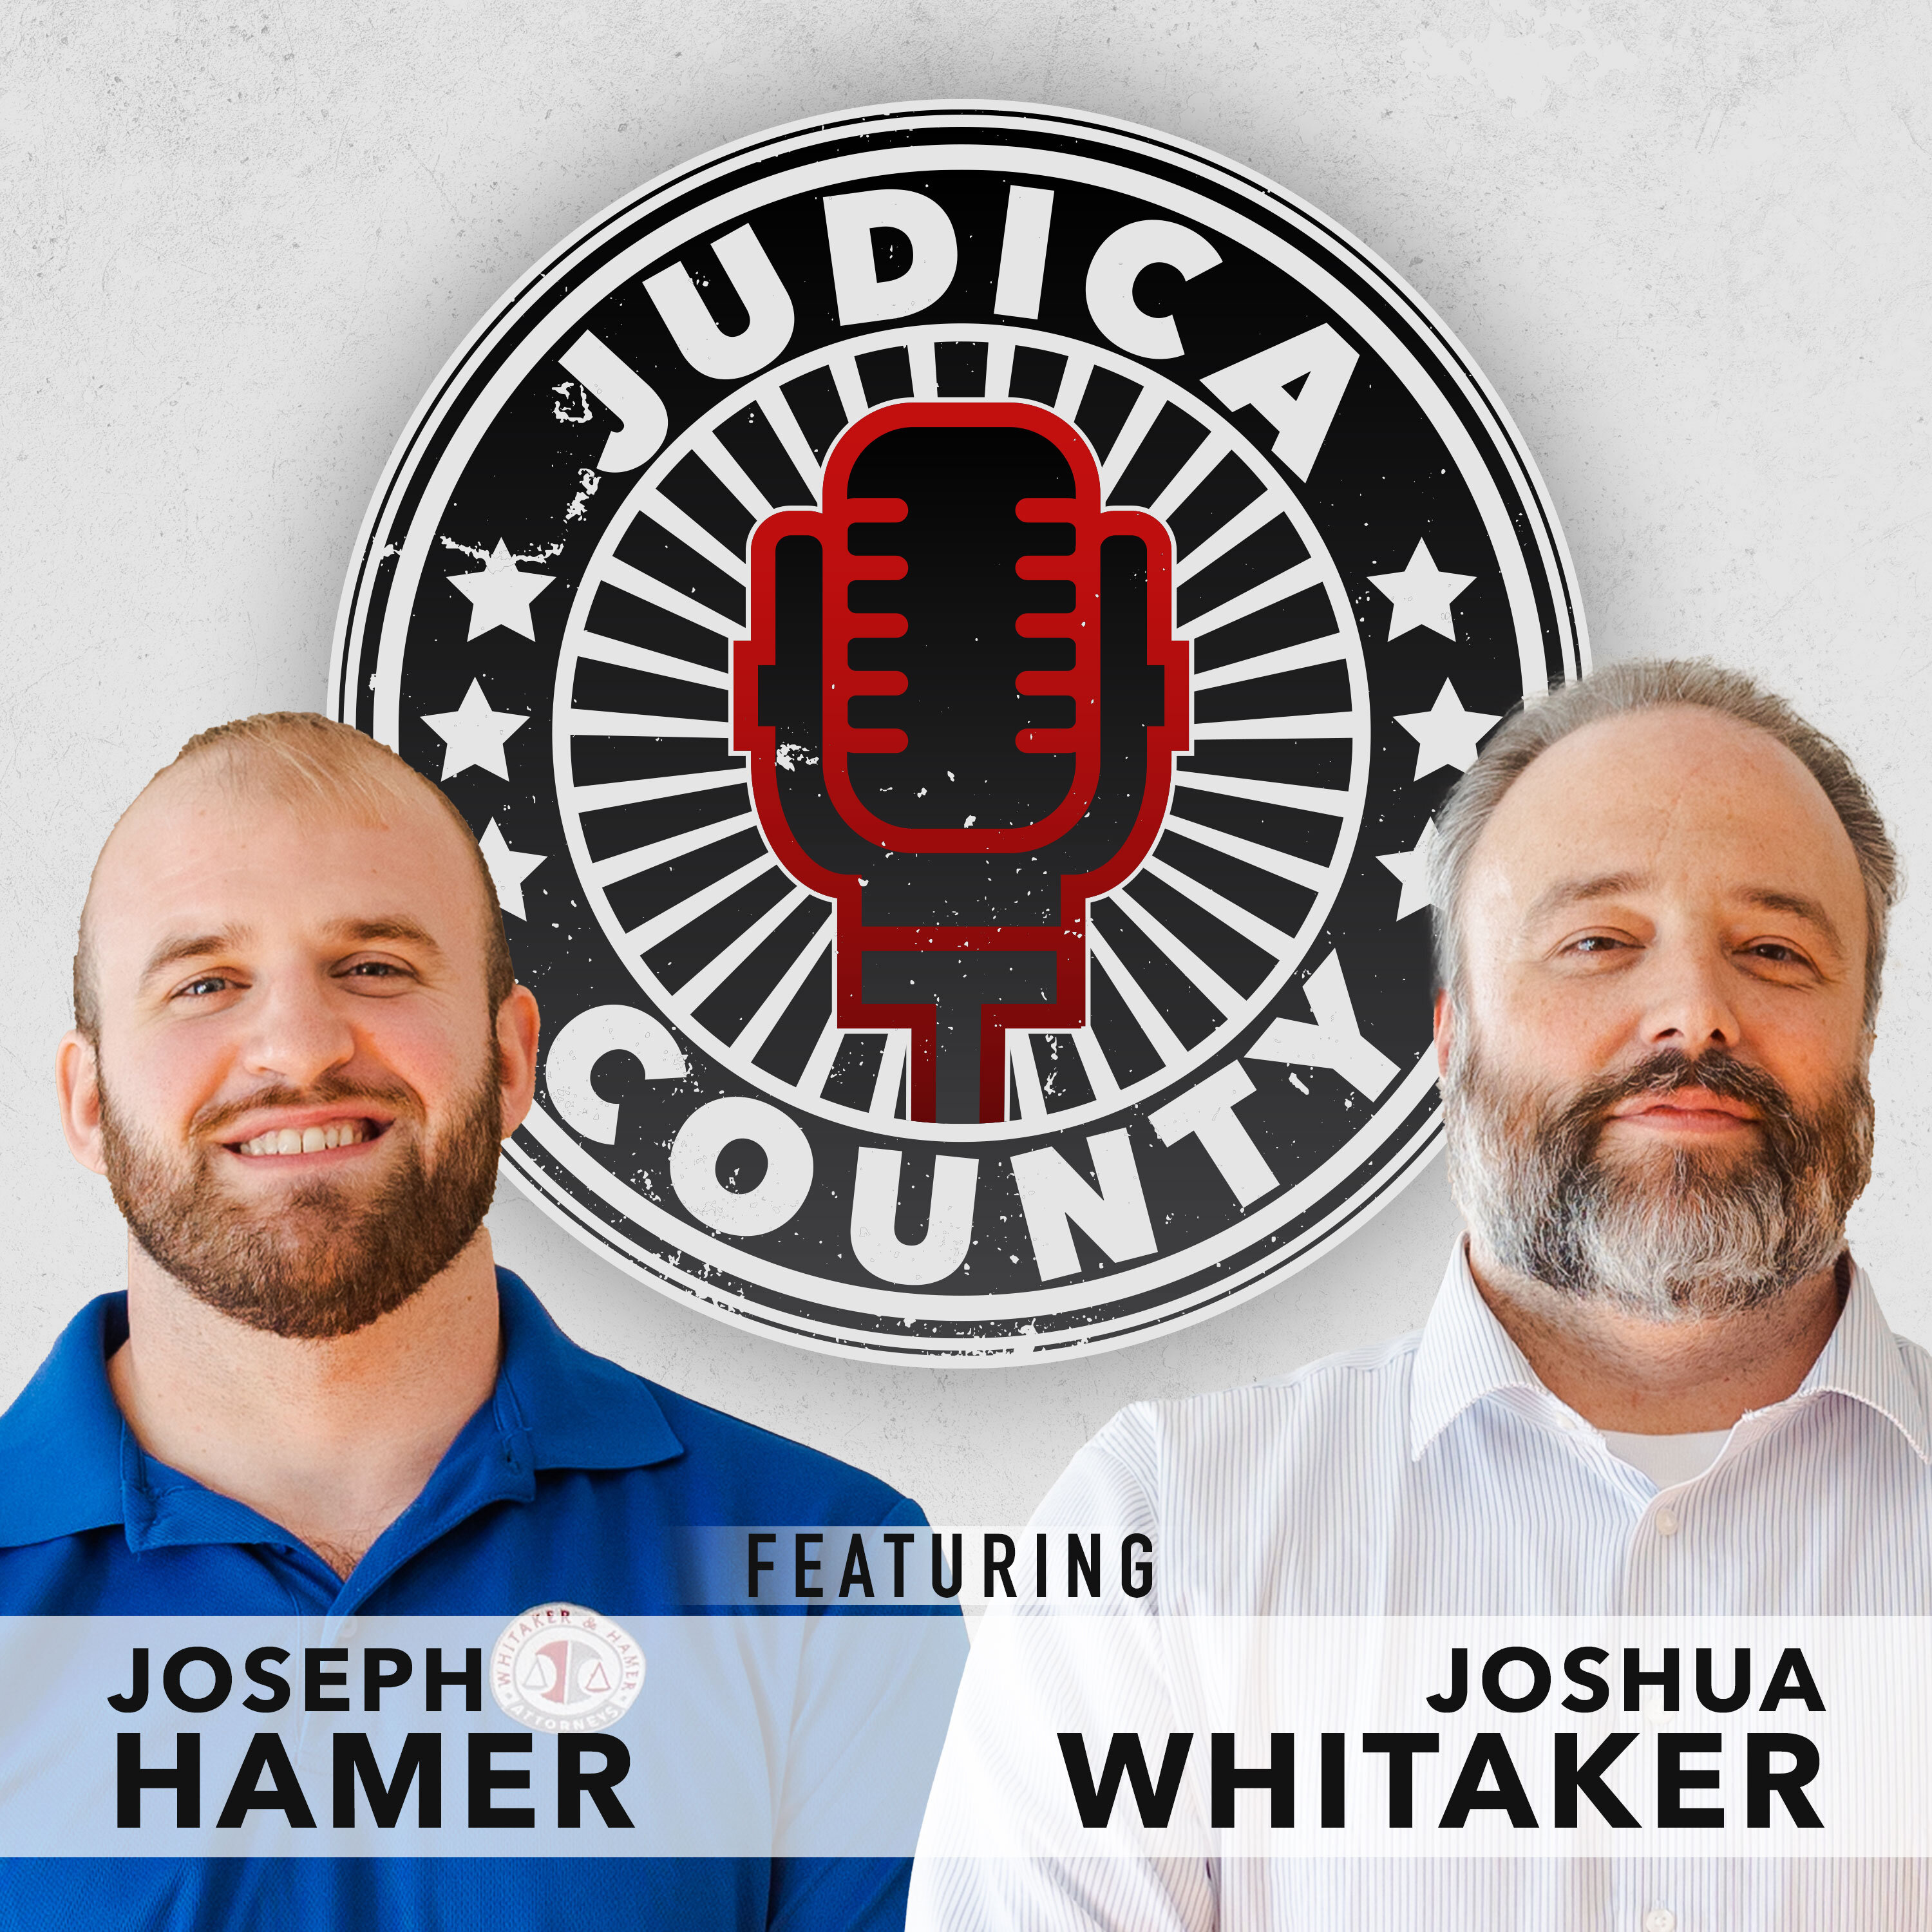 Judica County with Joshua Whitaker & Joseph Hamer